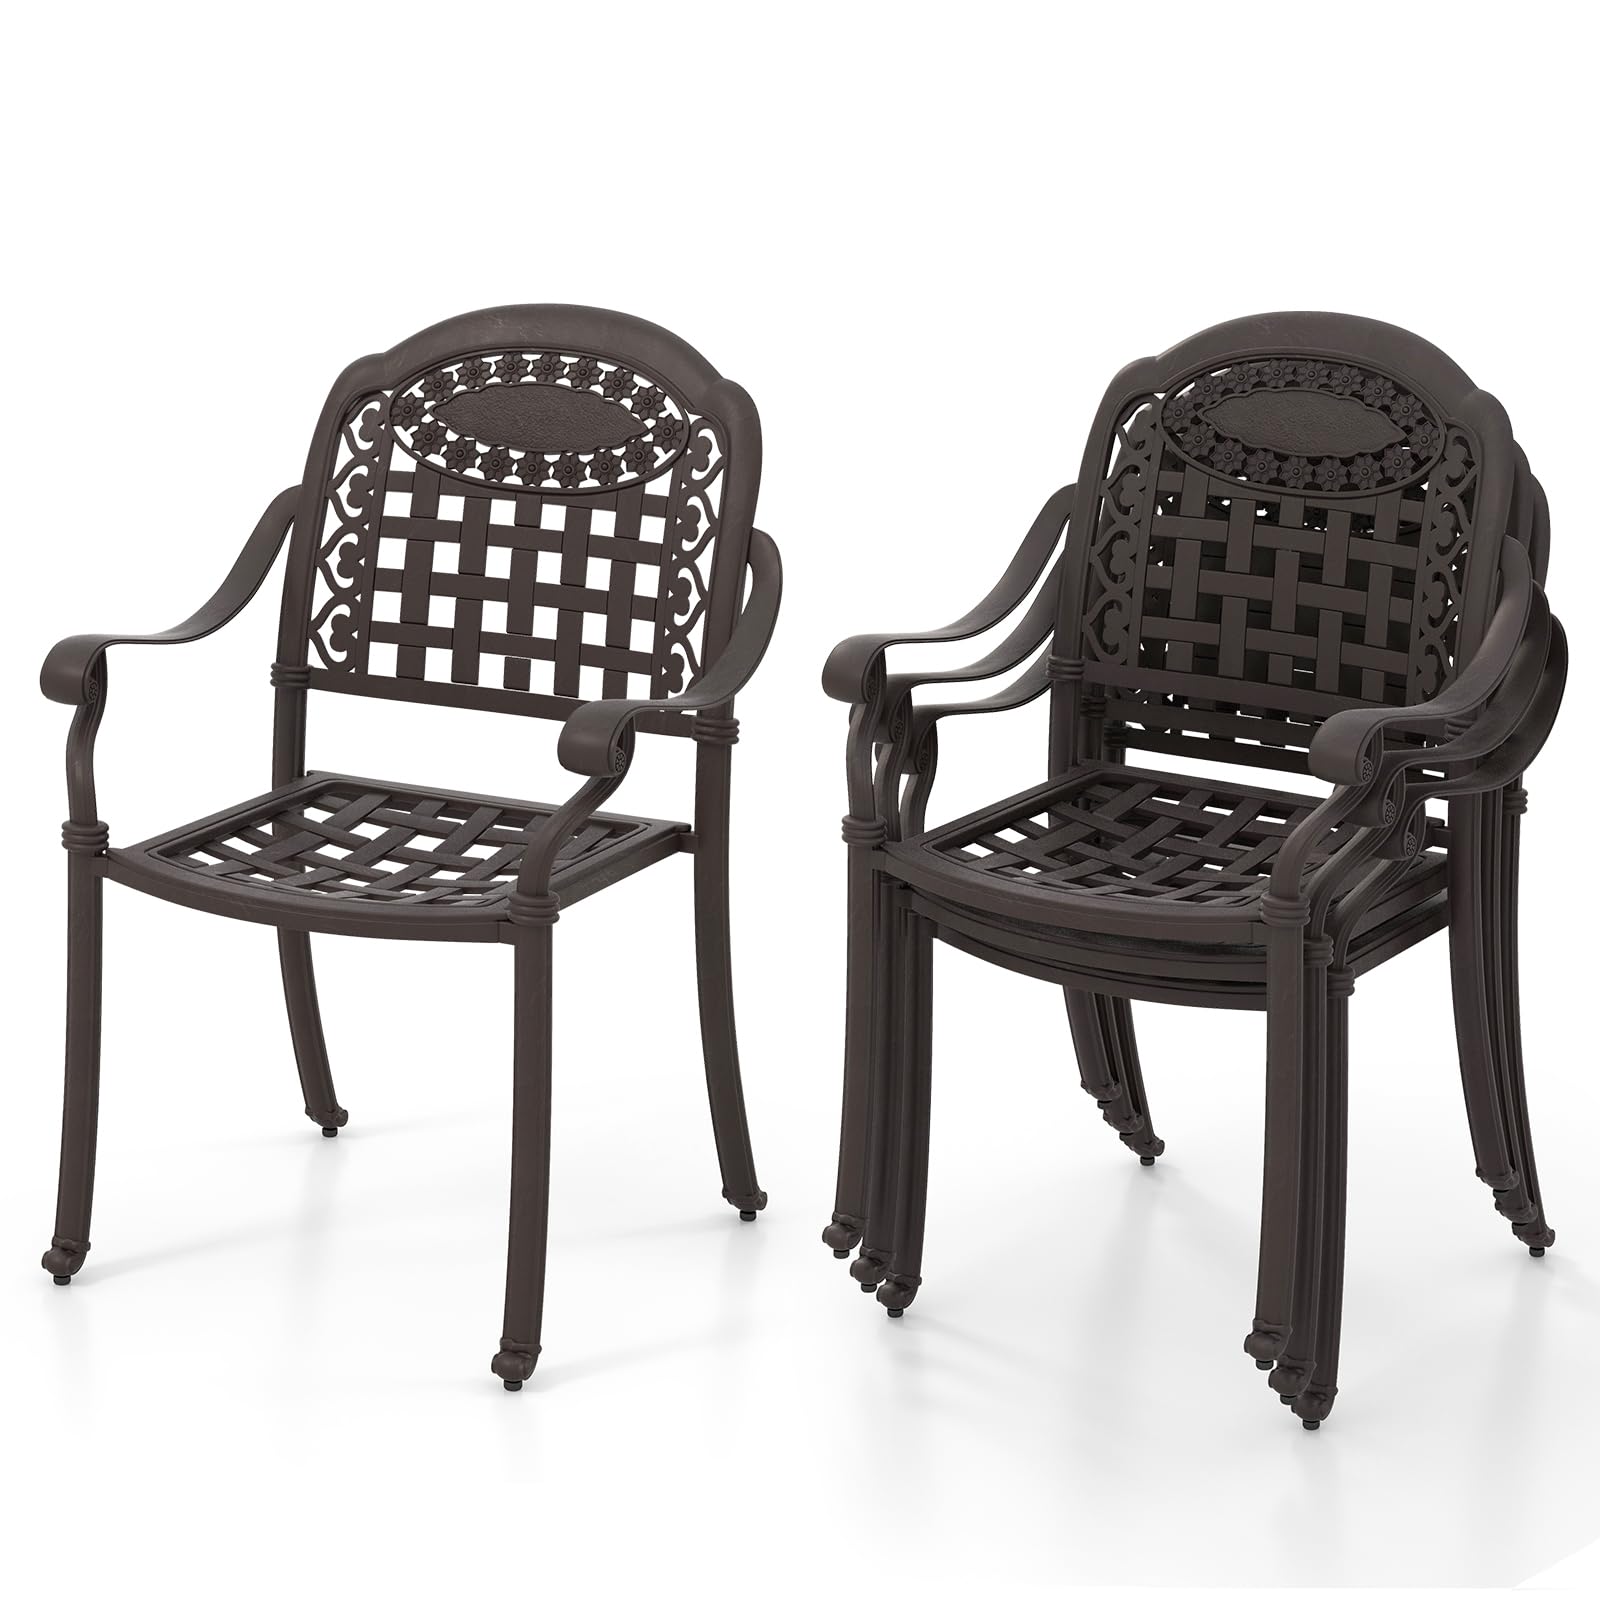 Giantex Stackable Outdoor Chairs Set of 4